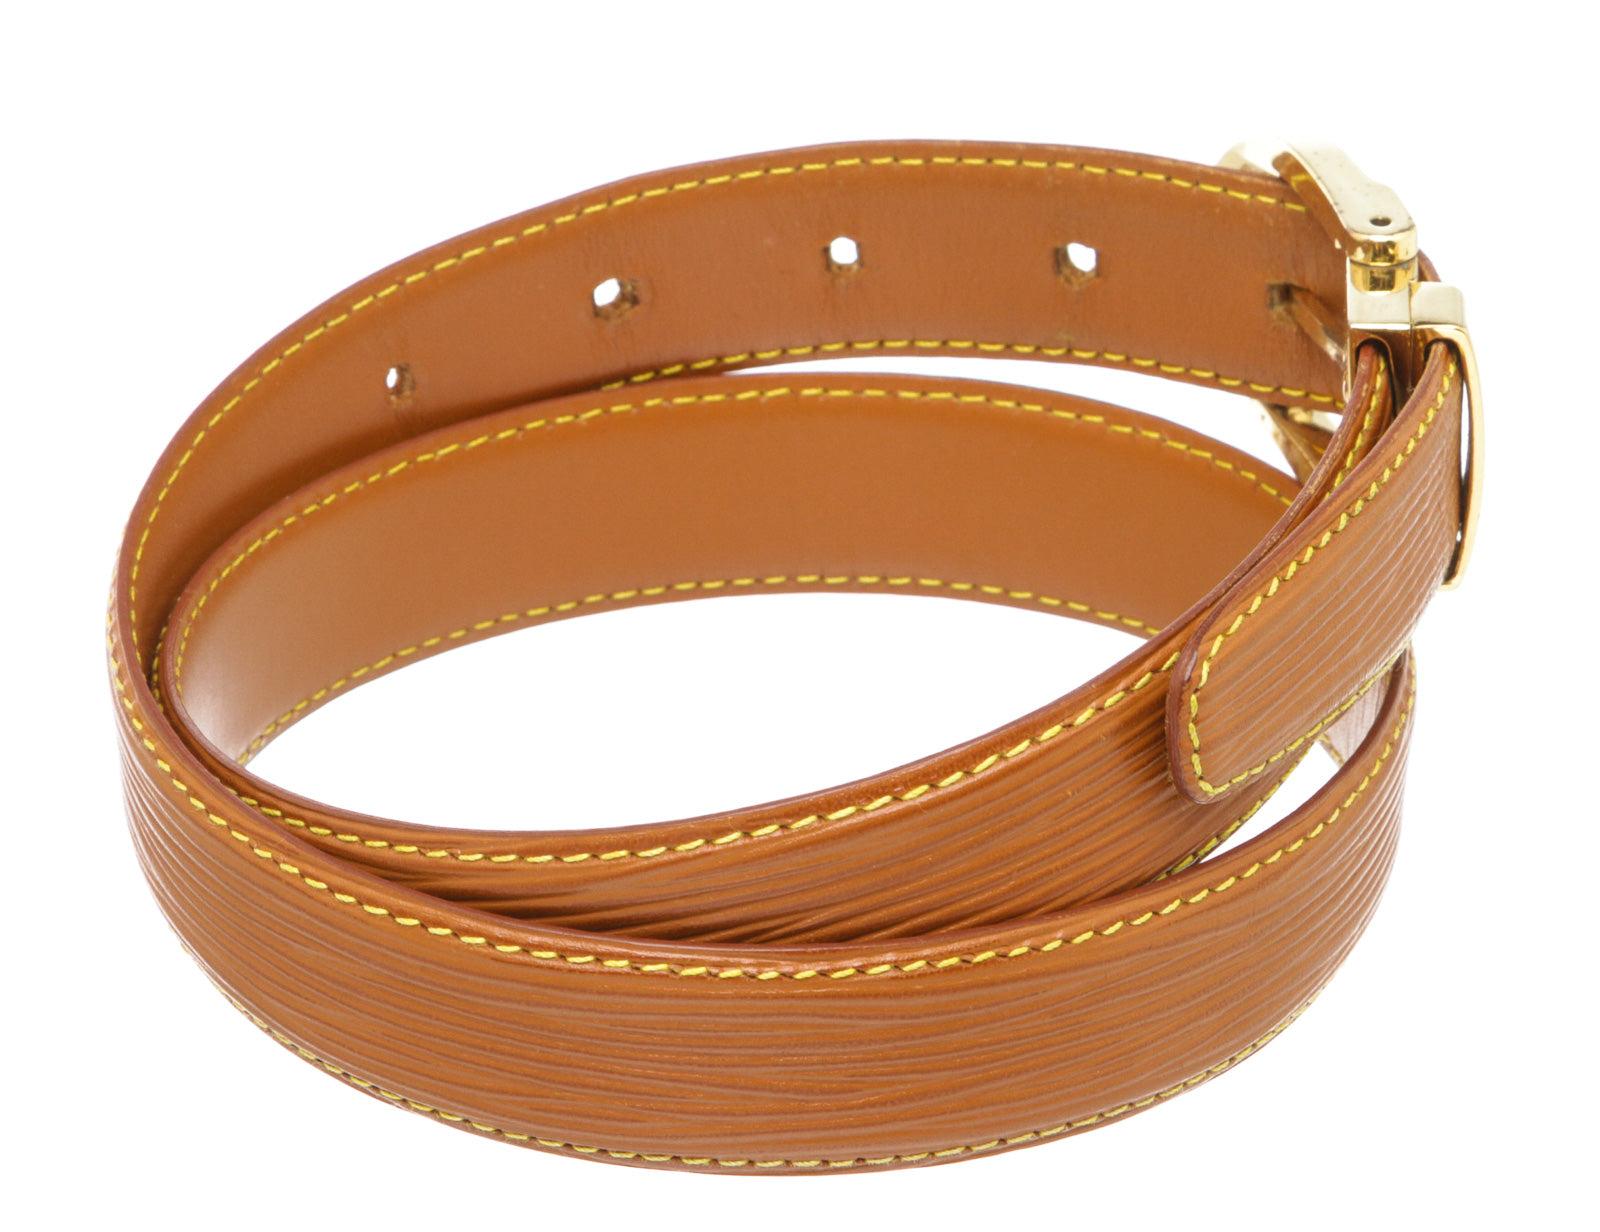 Brown Epi leather Louis Vuitton Epi Skinny Classique belt with gold-tone buckle closure. Designer size 85

16315MSC MKR